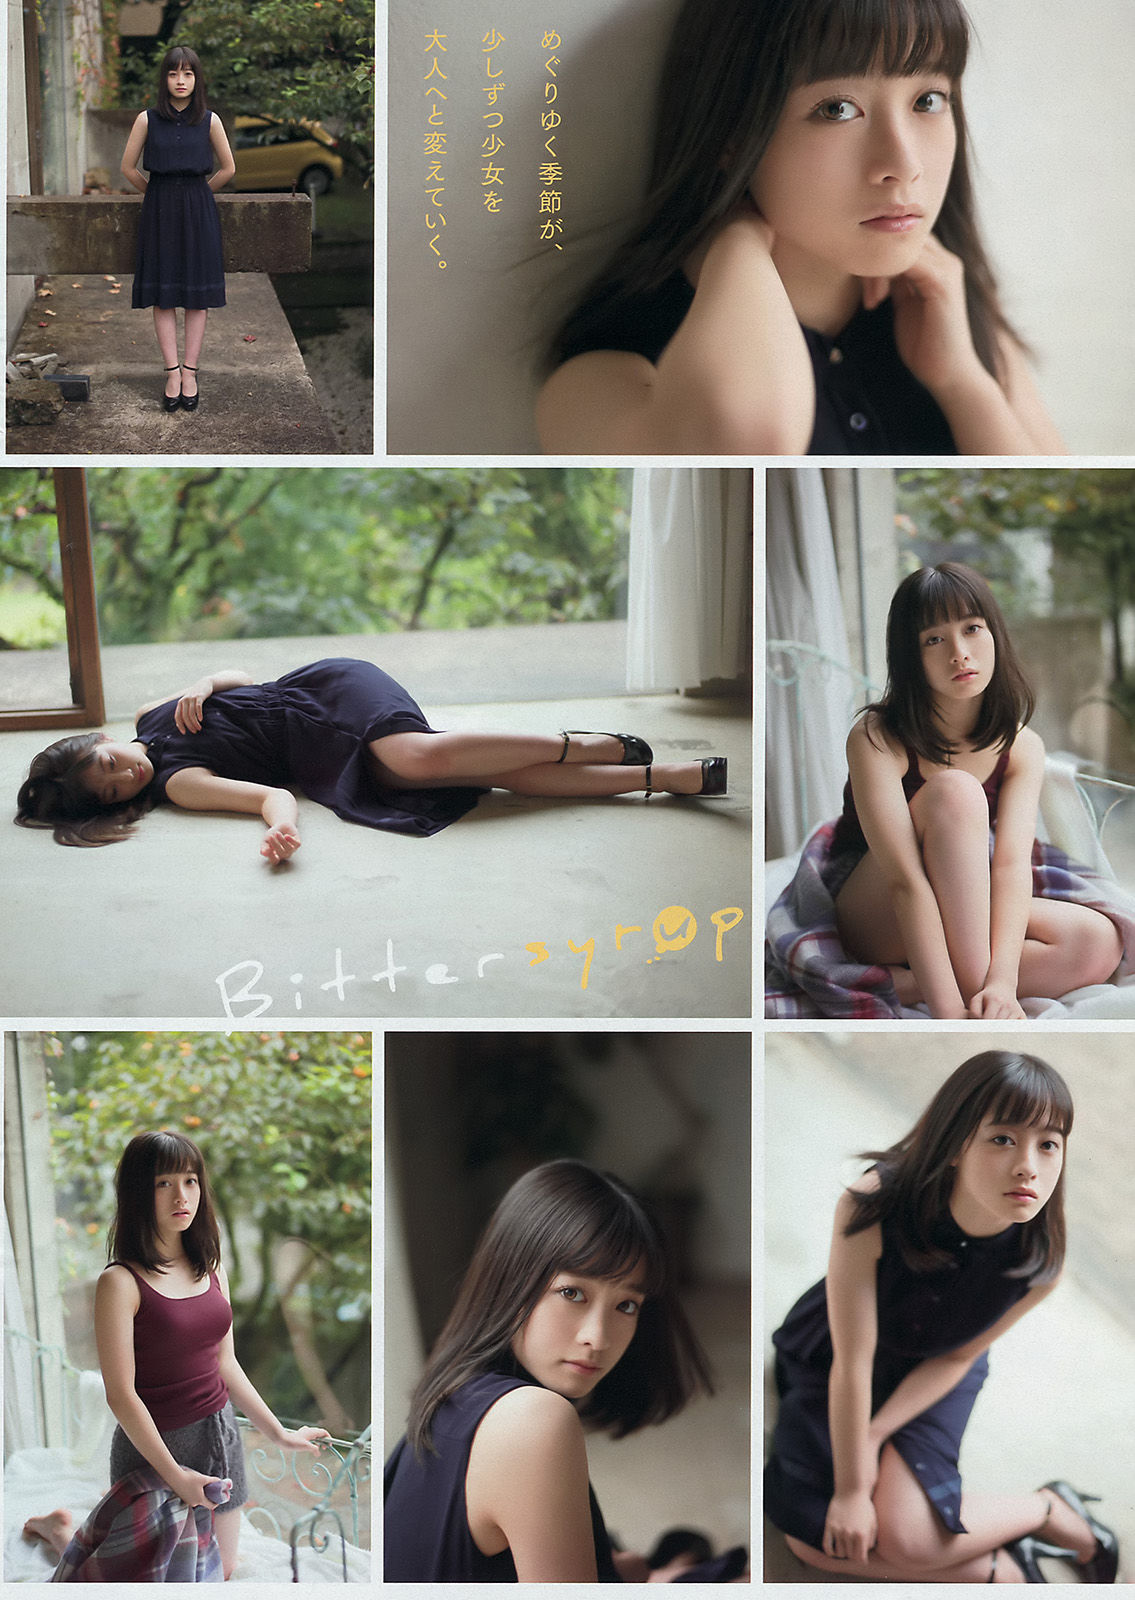 [Revista joven] Kanna Hashimoto Rina Asakawa 2016 No.01 Fotografía Página 6 No.c2a084